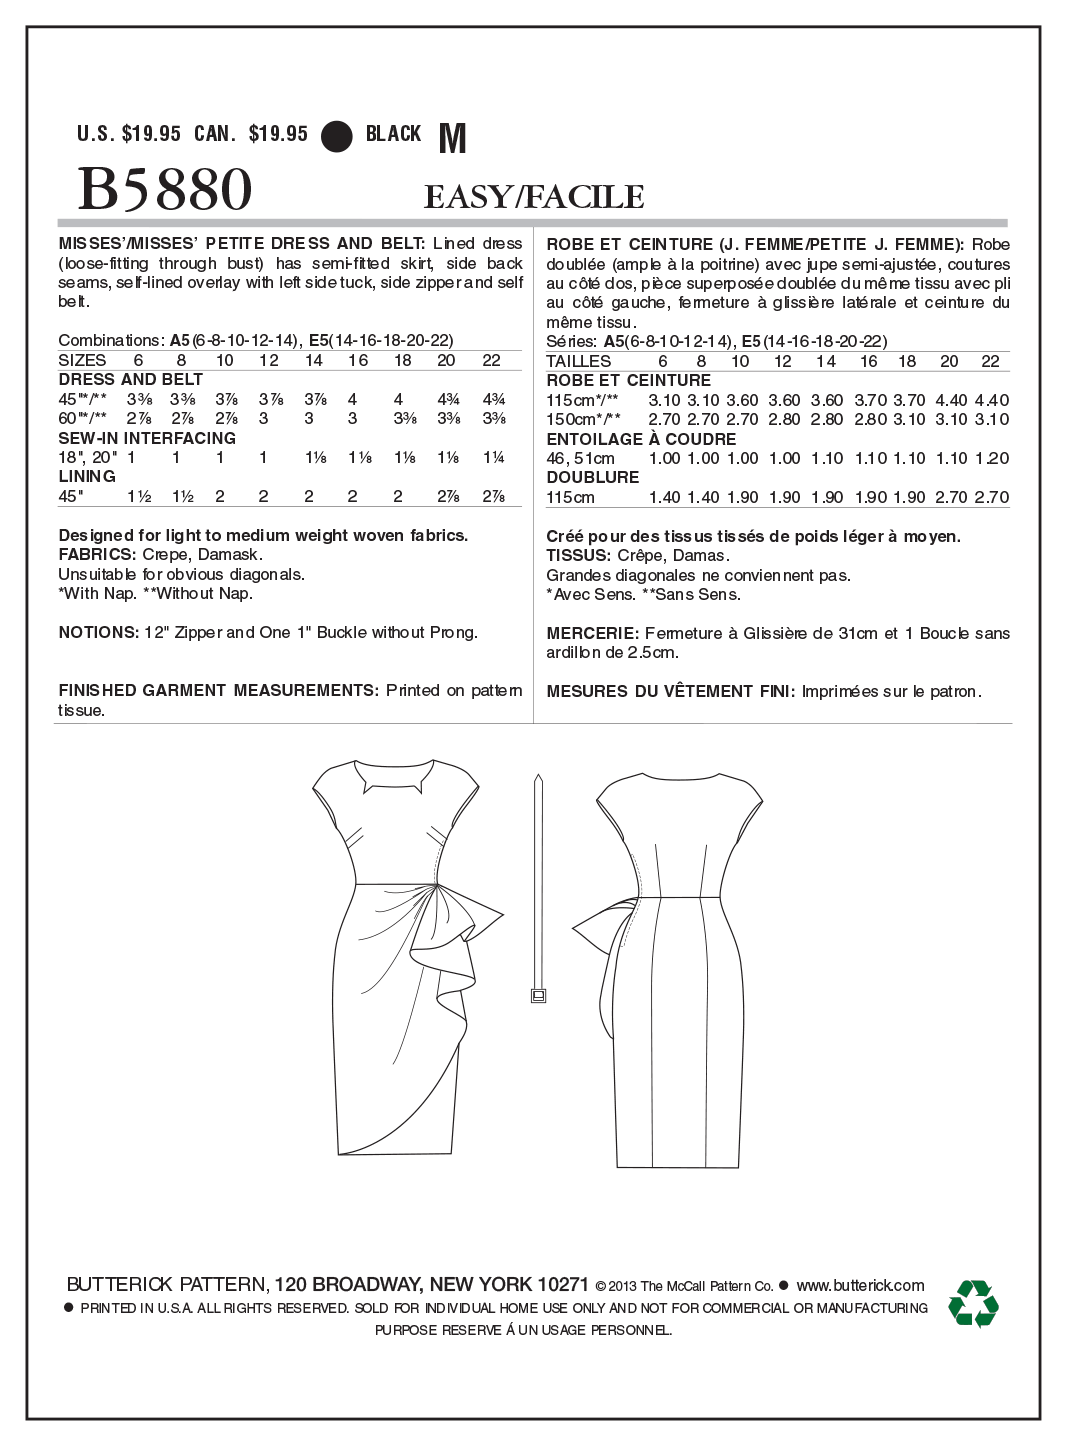 Butterick Sewing Pattern B5880 Misses'/Misses' Petite Dress and Belt